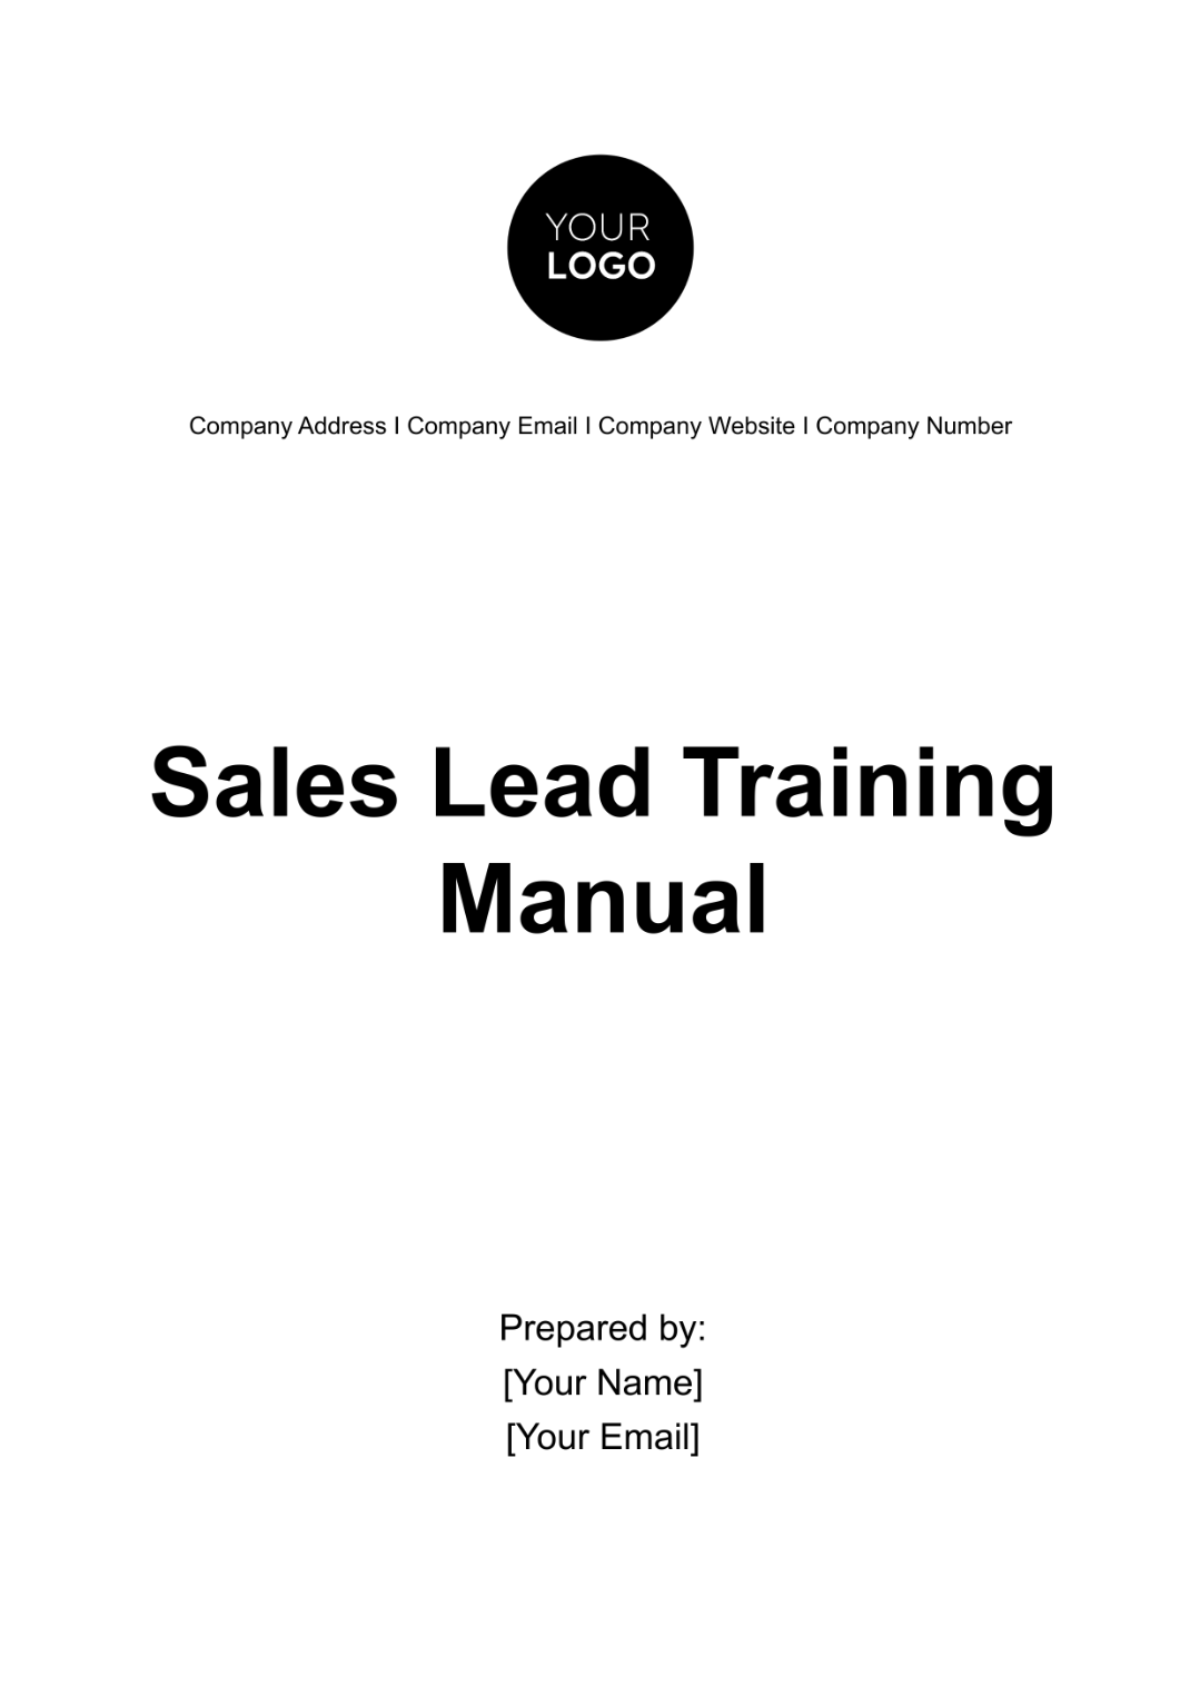 Free Sales Lead Training Manual Template